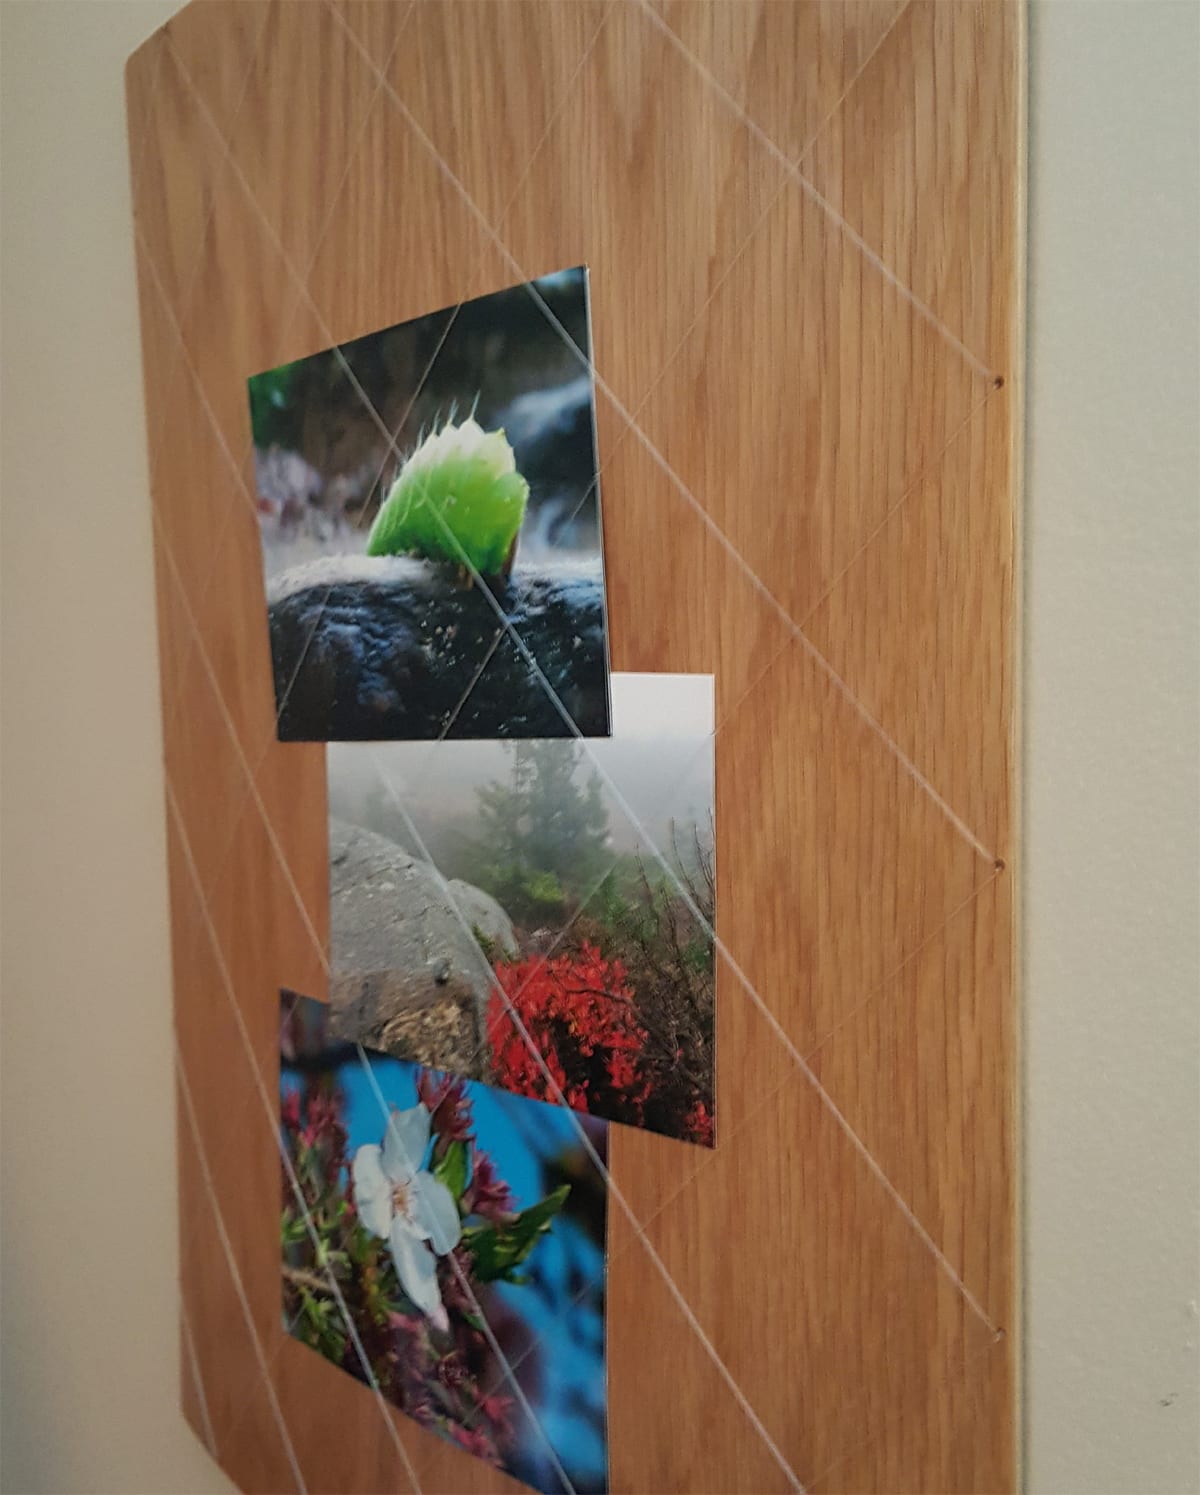 myPicboard Tack-less Bulletin Board Multiple Picture Frame in Oak